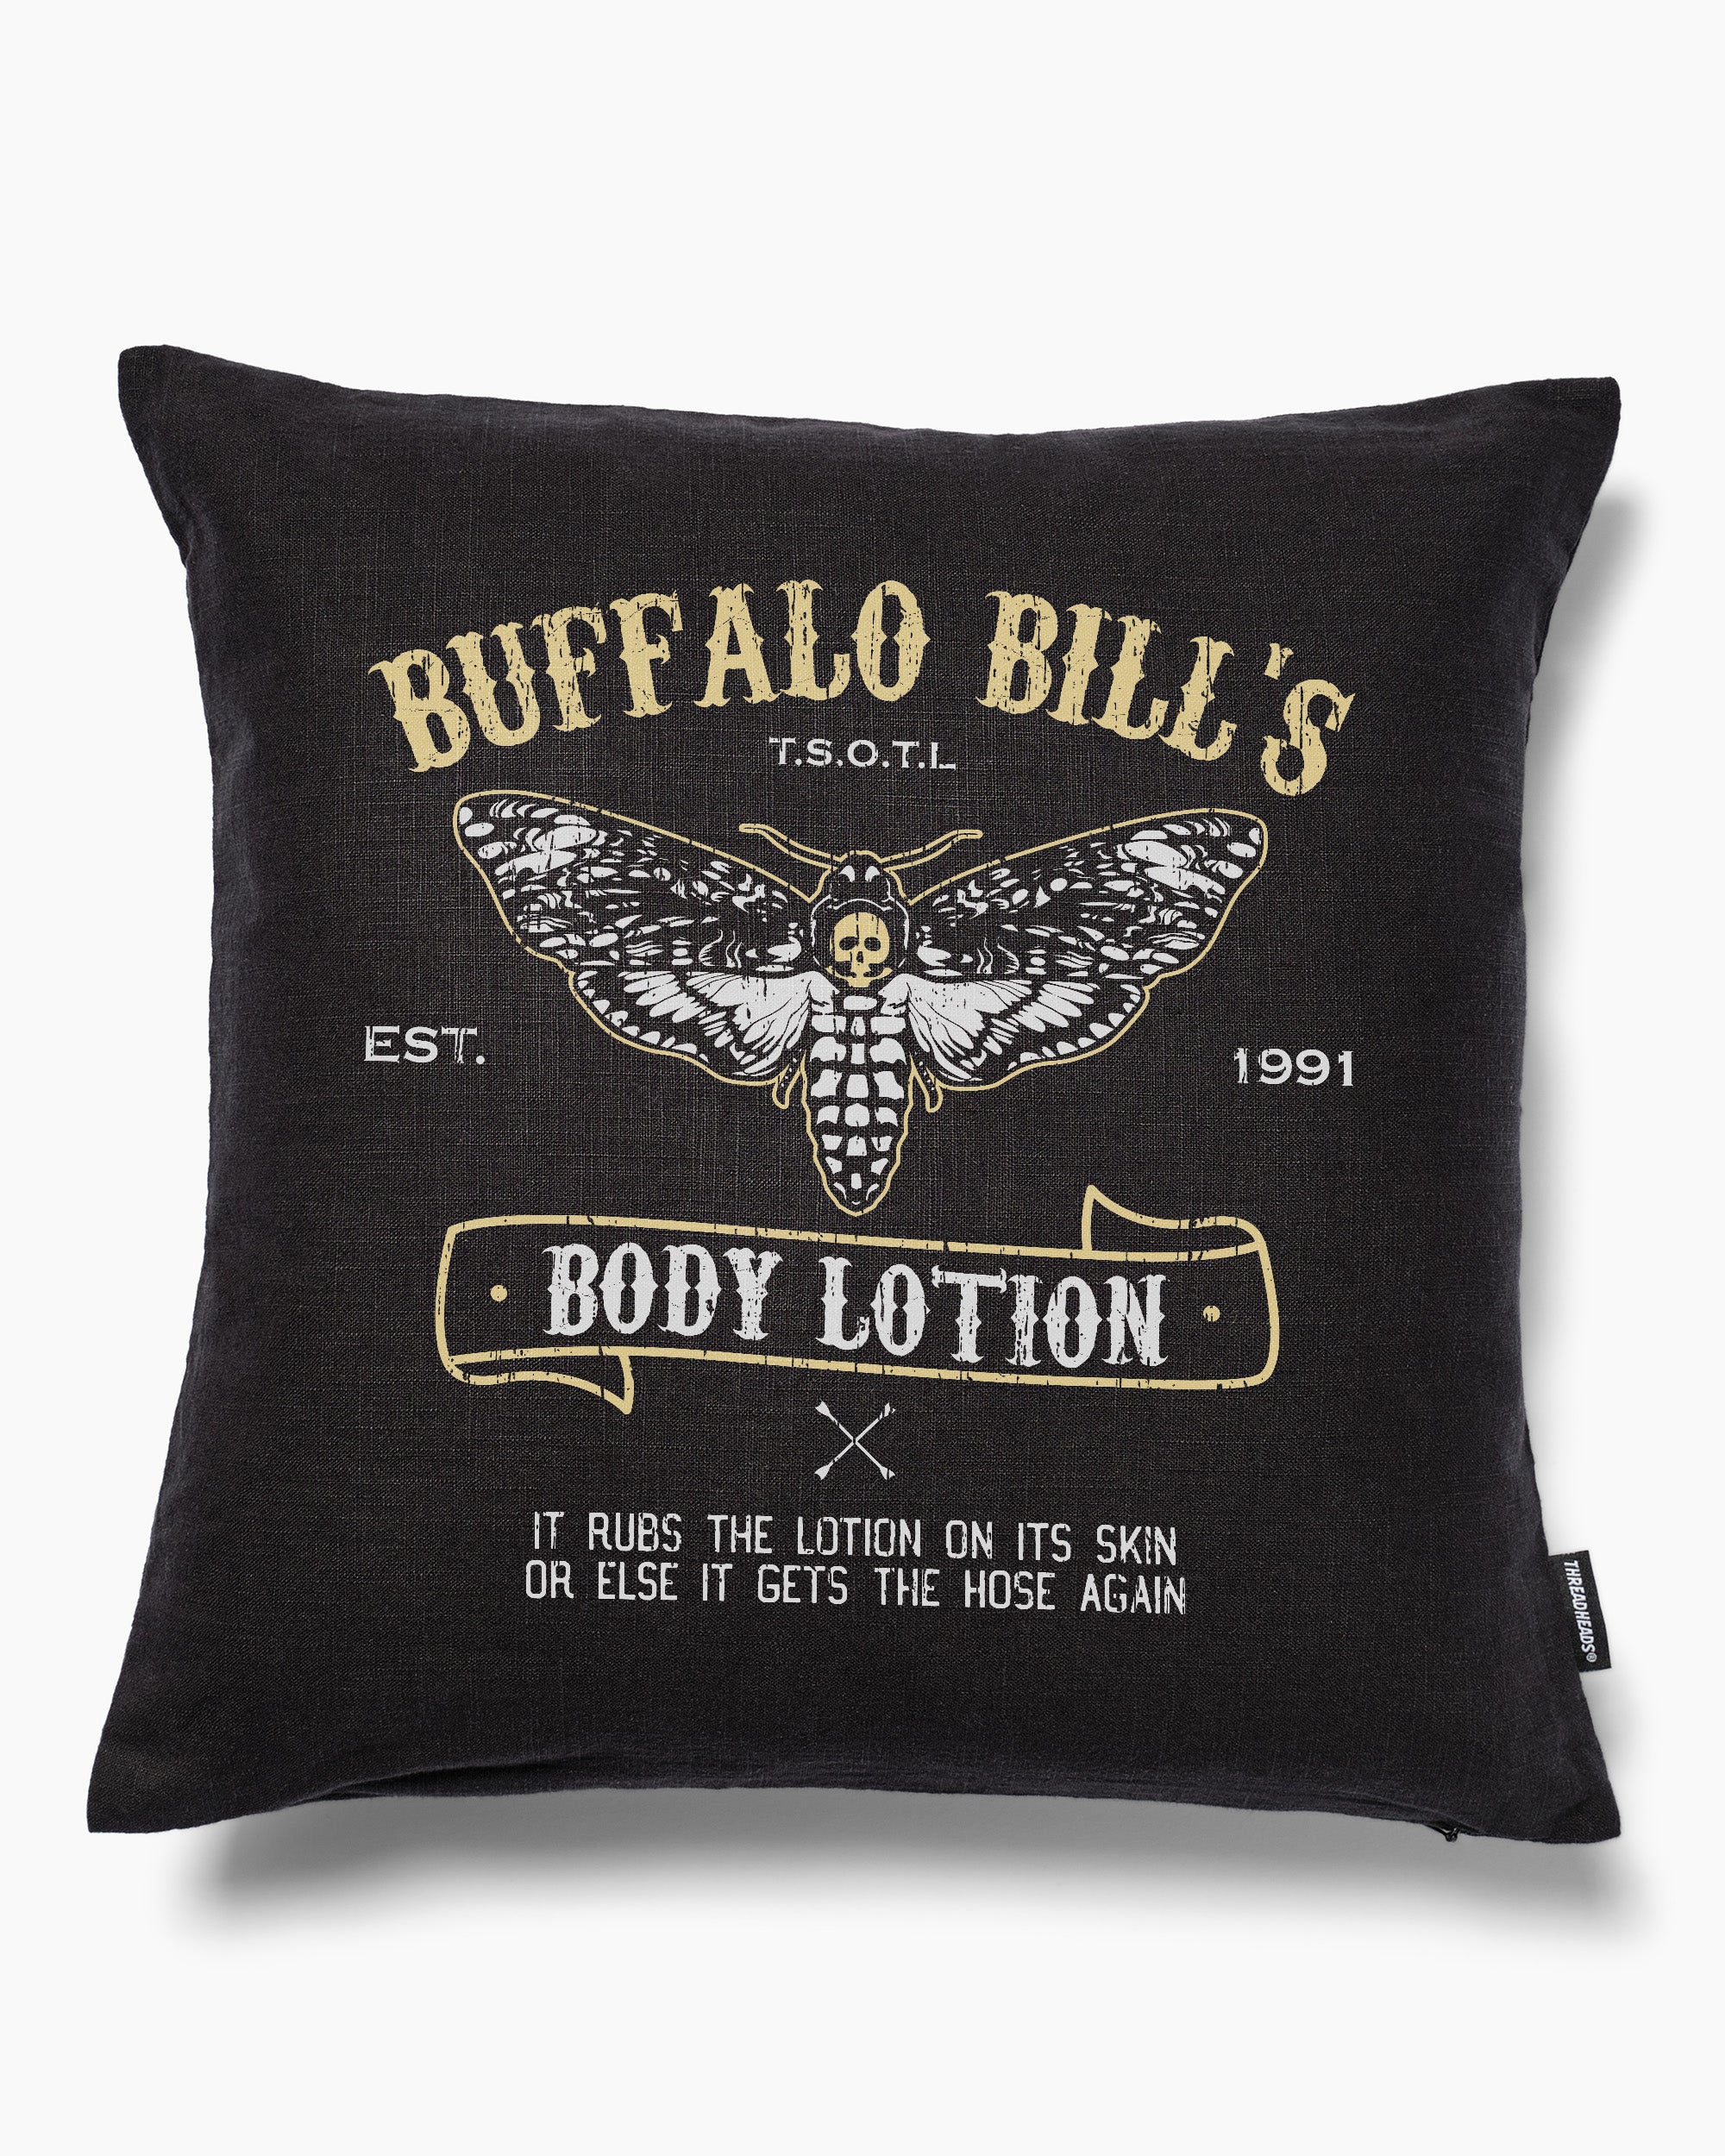 Buffalo Bill's Rubbing Lotion Cushion